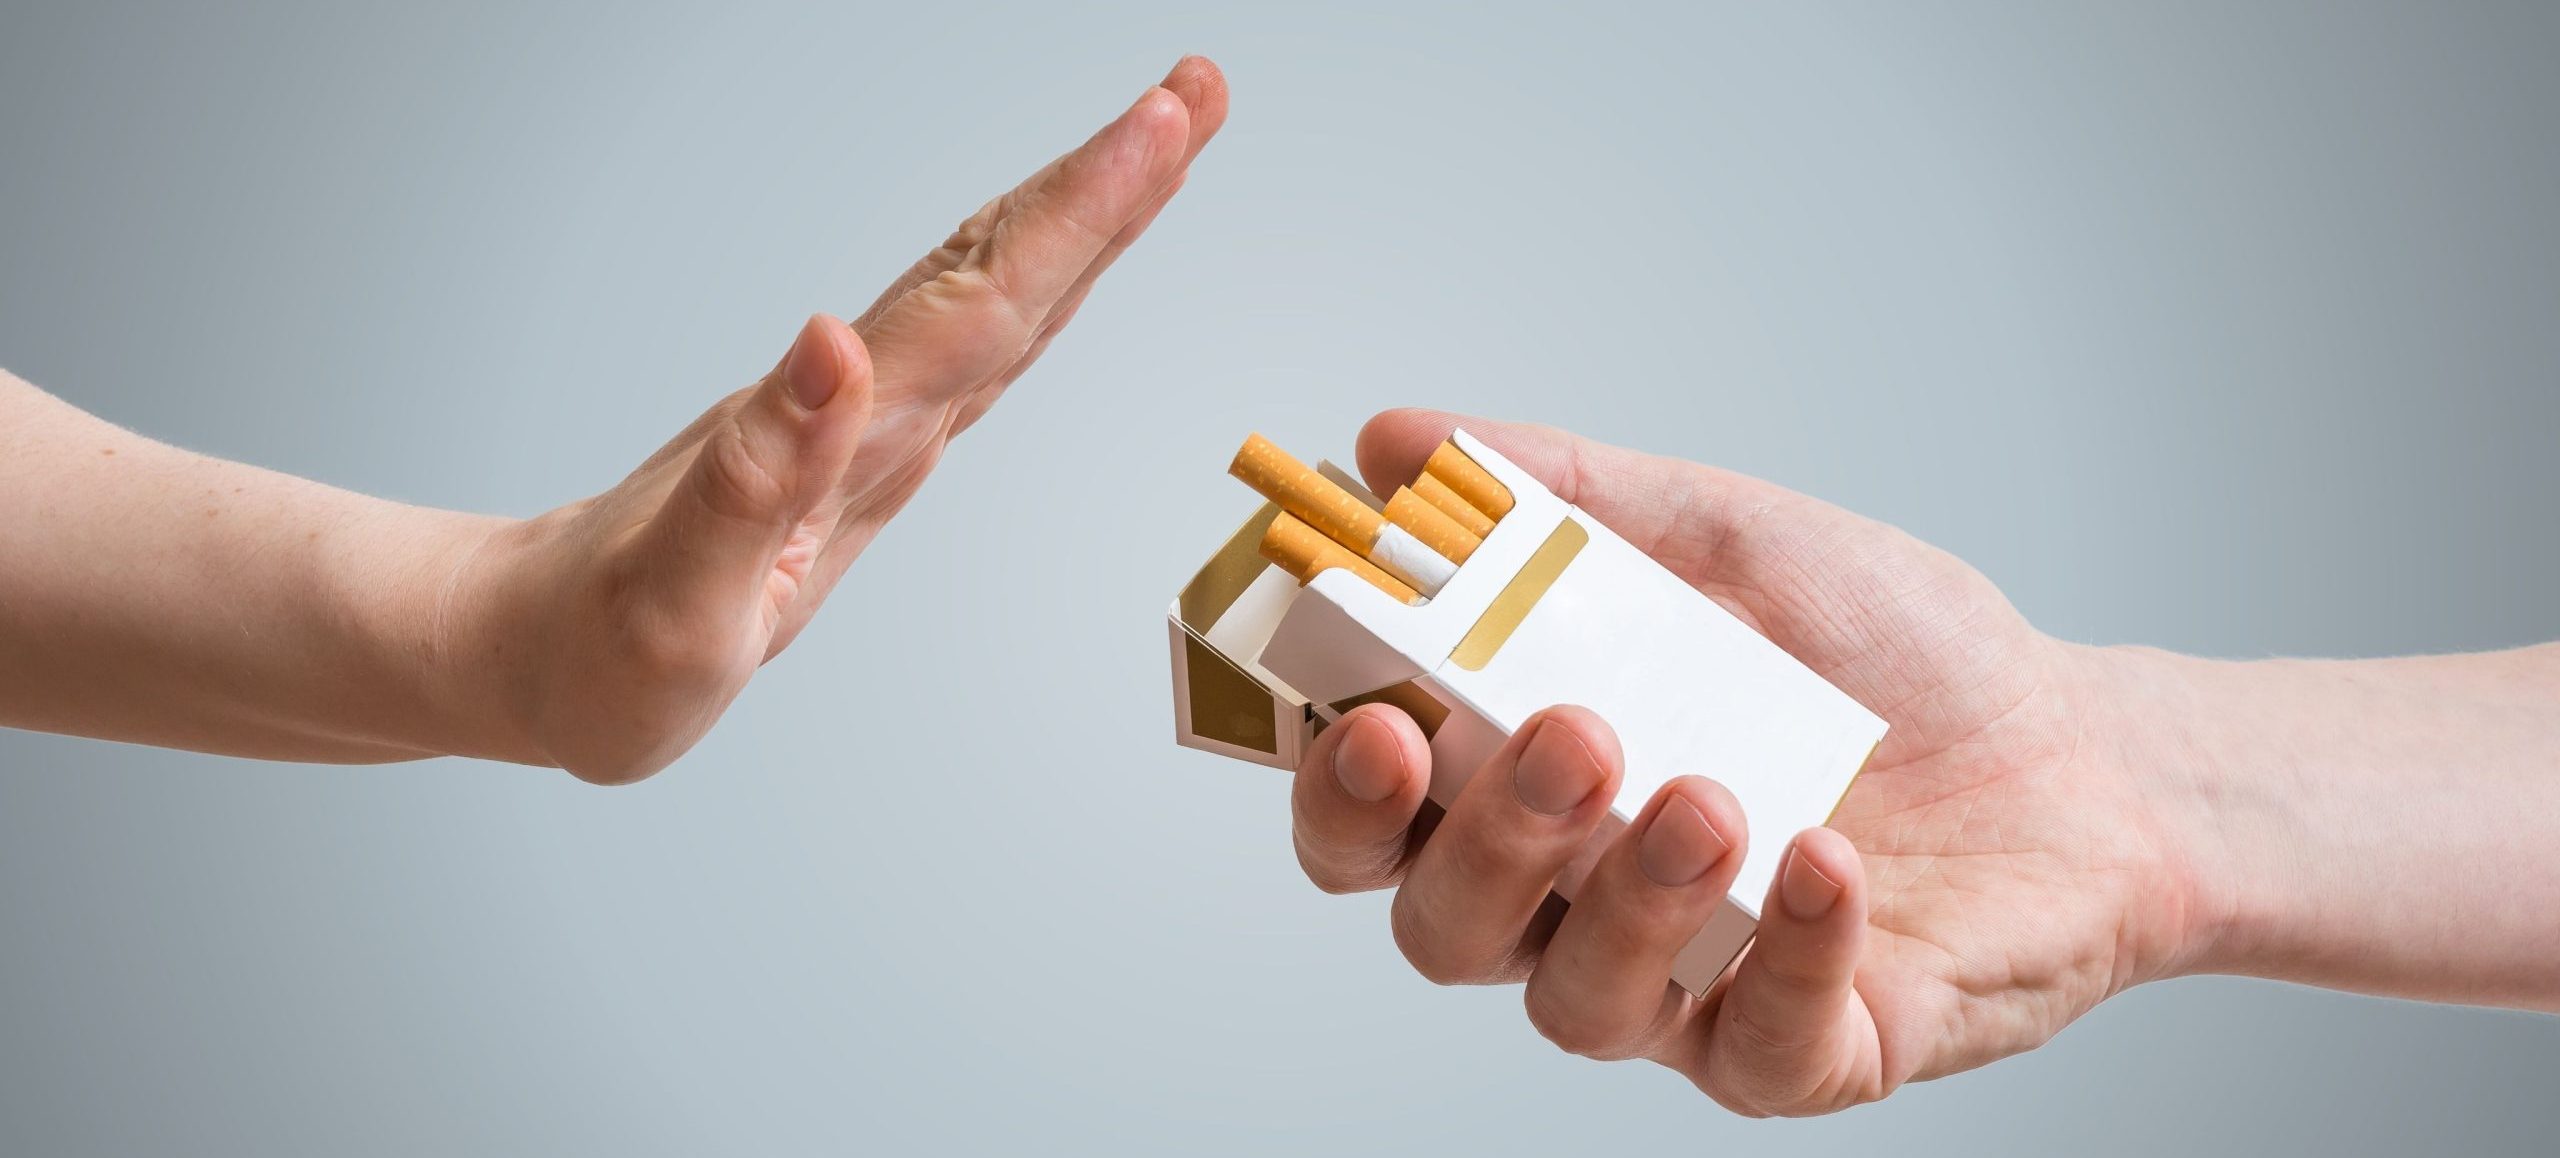 Tobacco Cessation Provider Training